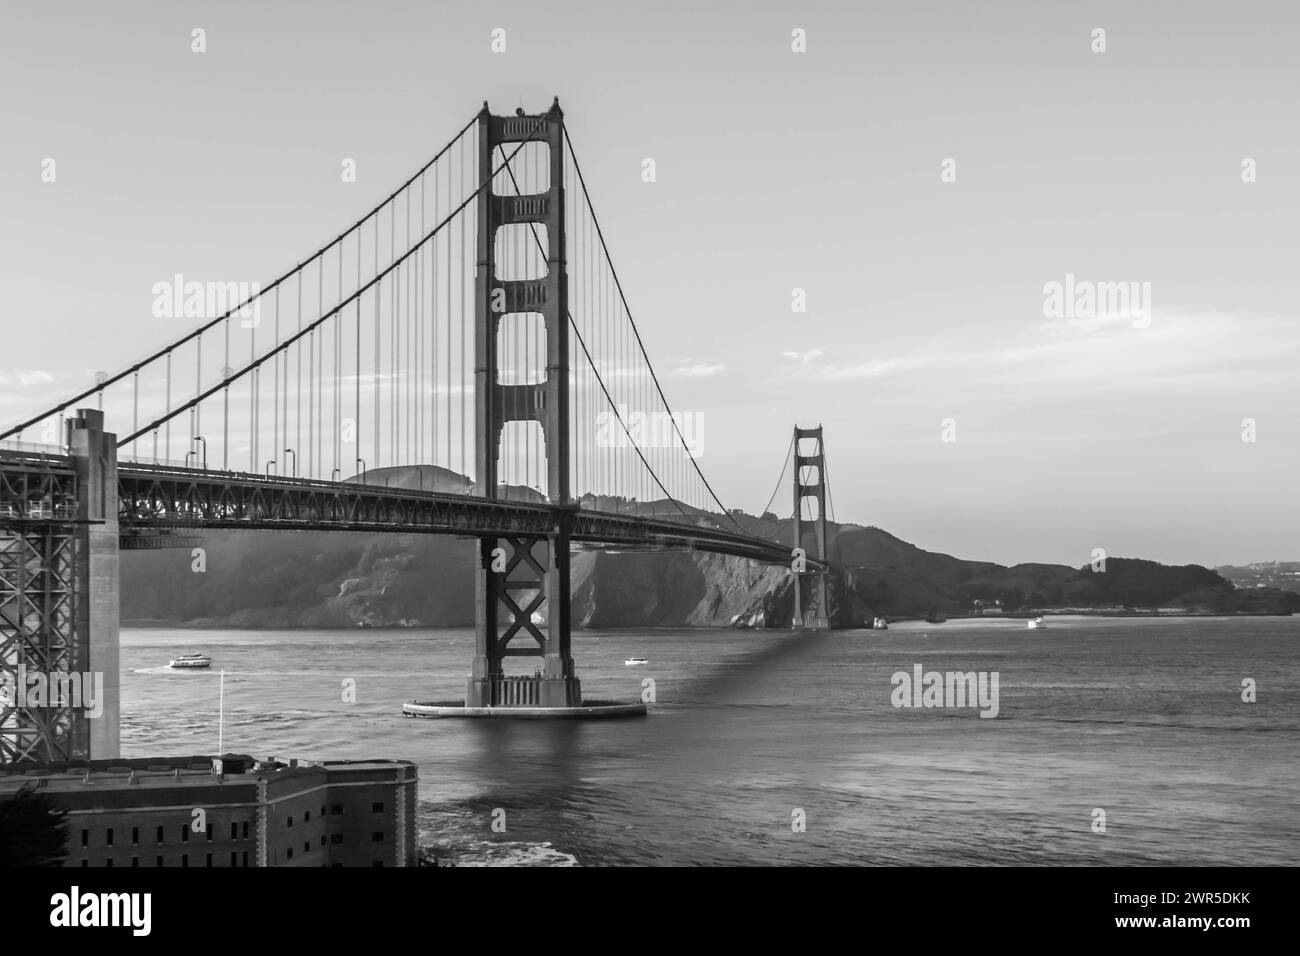 Photograph of the famous Golden Gate Bridge in San Francisco Stock Photo